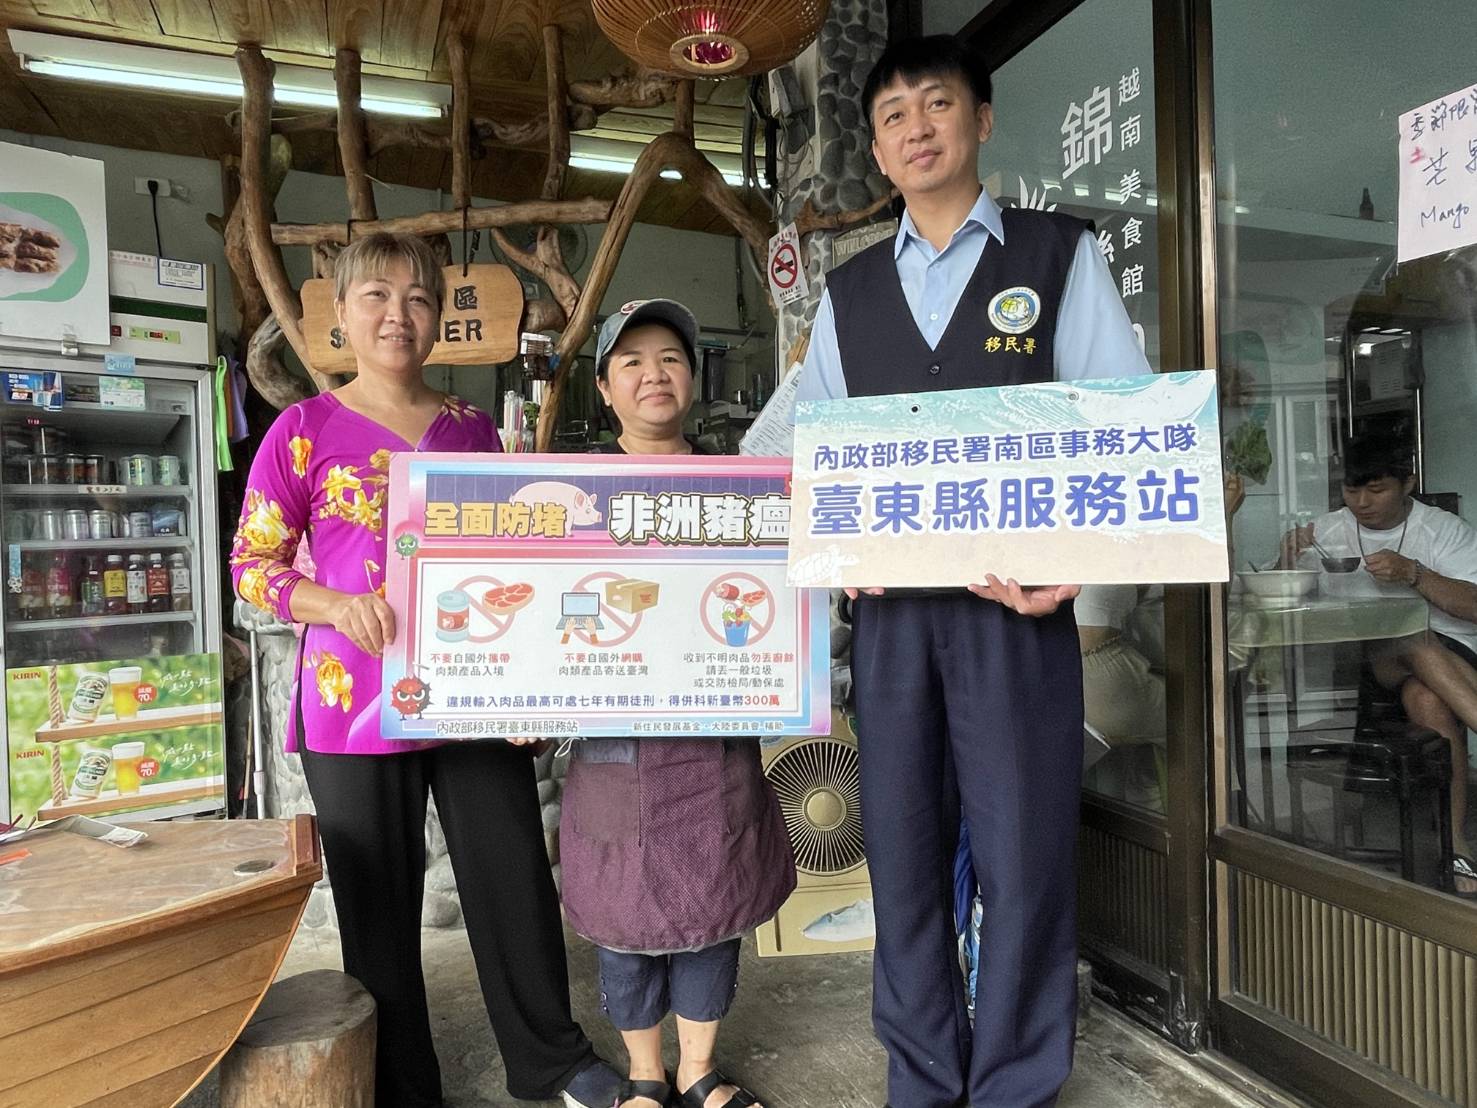 Stasiun Layanan Imigrasi Nasional Kabupaten Taitung secara aktif mempromosikan pendidikan lingkungan dan mencegah demam babi Afrika.  (Sumber foto : Departemen Imigrasi)